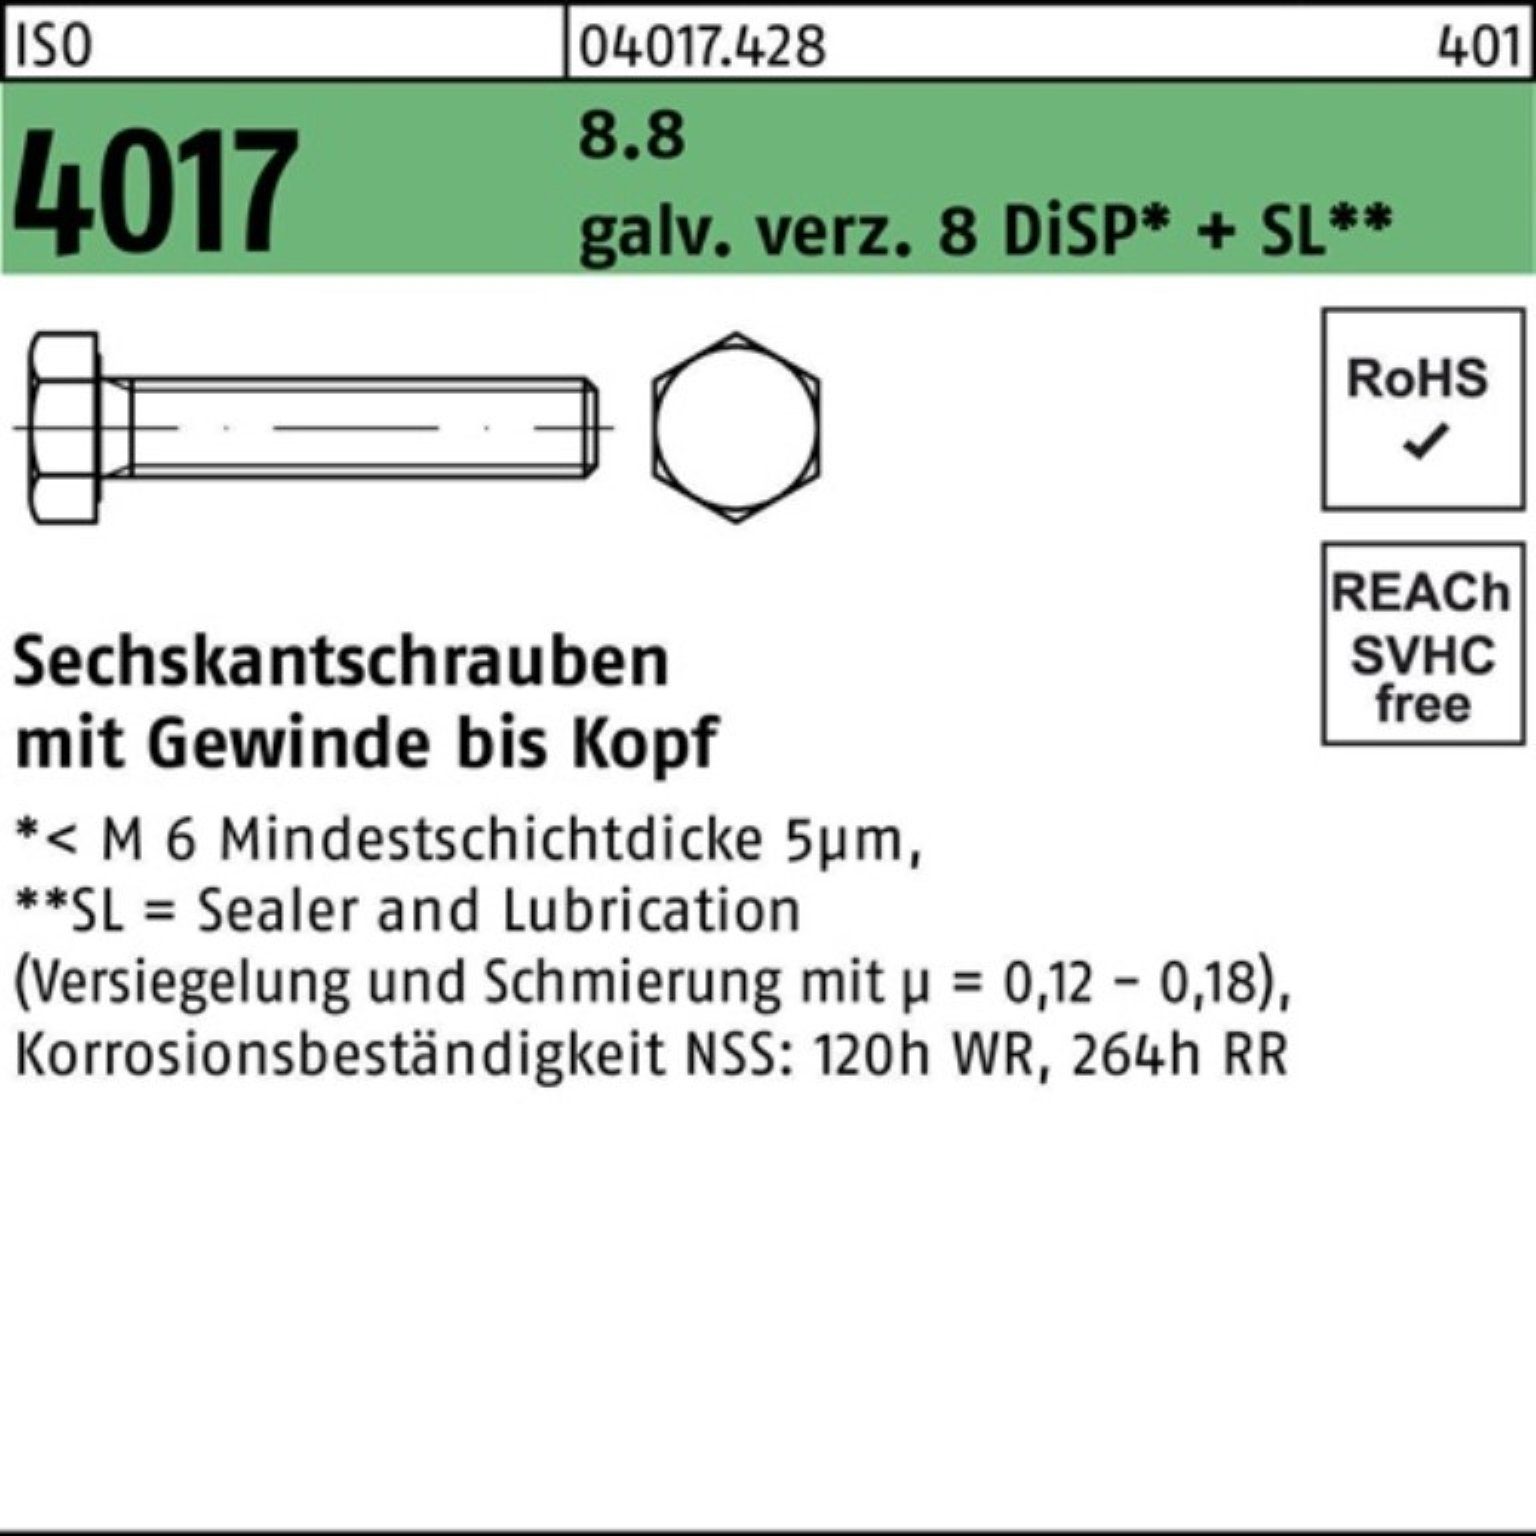 Bufab Sechskantschraube 100er Pack galv.verz. 8.8 Sechskantschraube M16x 4017 130 ISO VG DiS 8